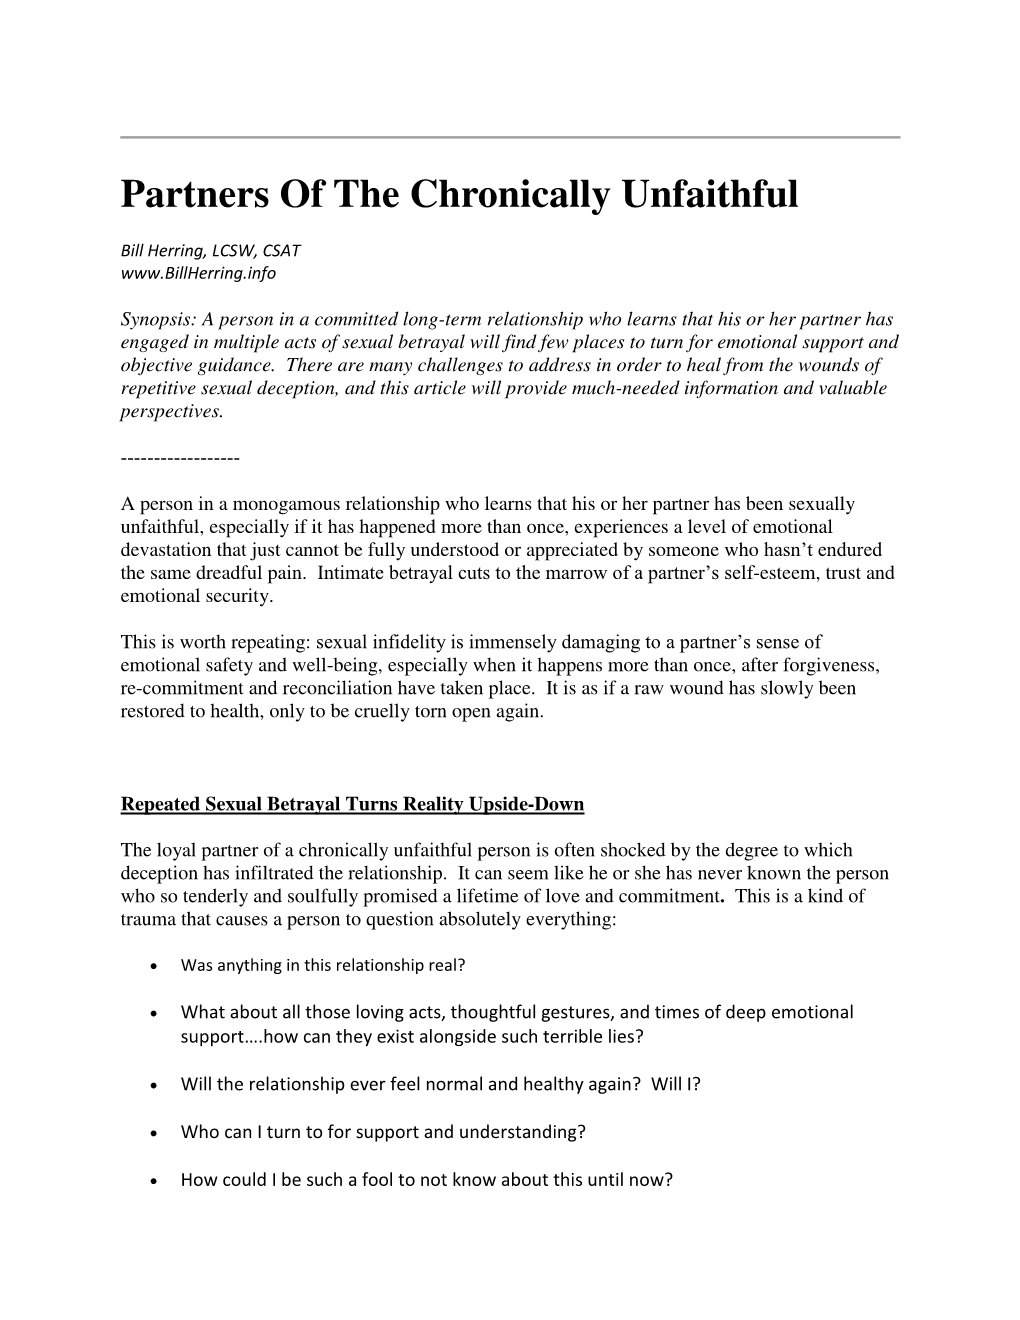 Partners of the Chronically Unfaithful